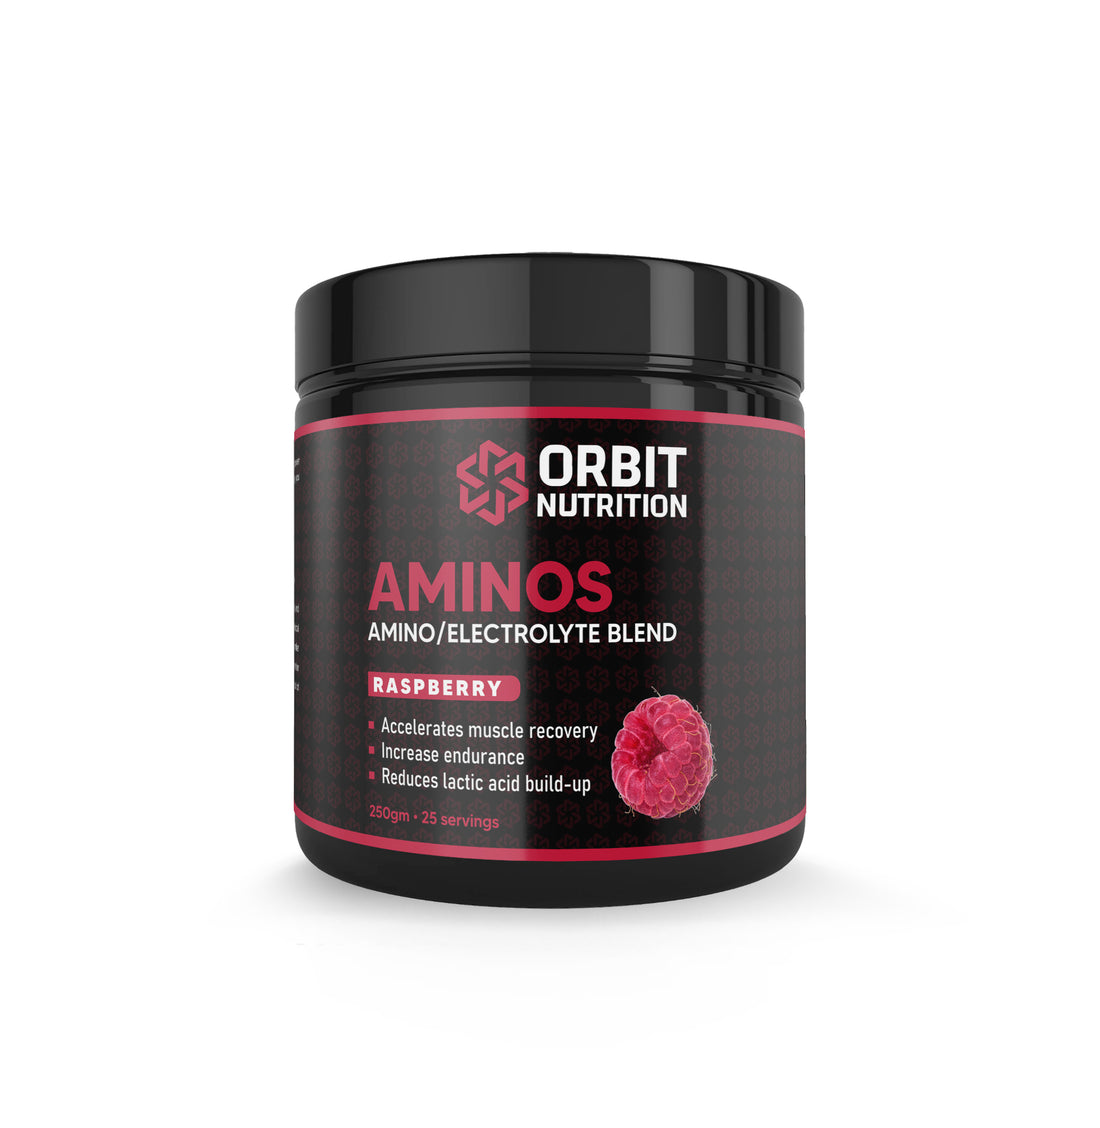 AMINOS - Amino/Electrolyte Blend - Raspberry